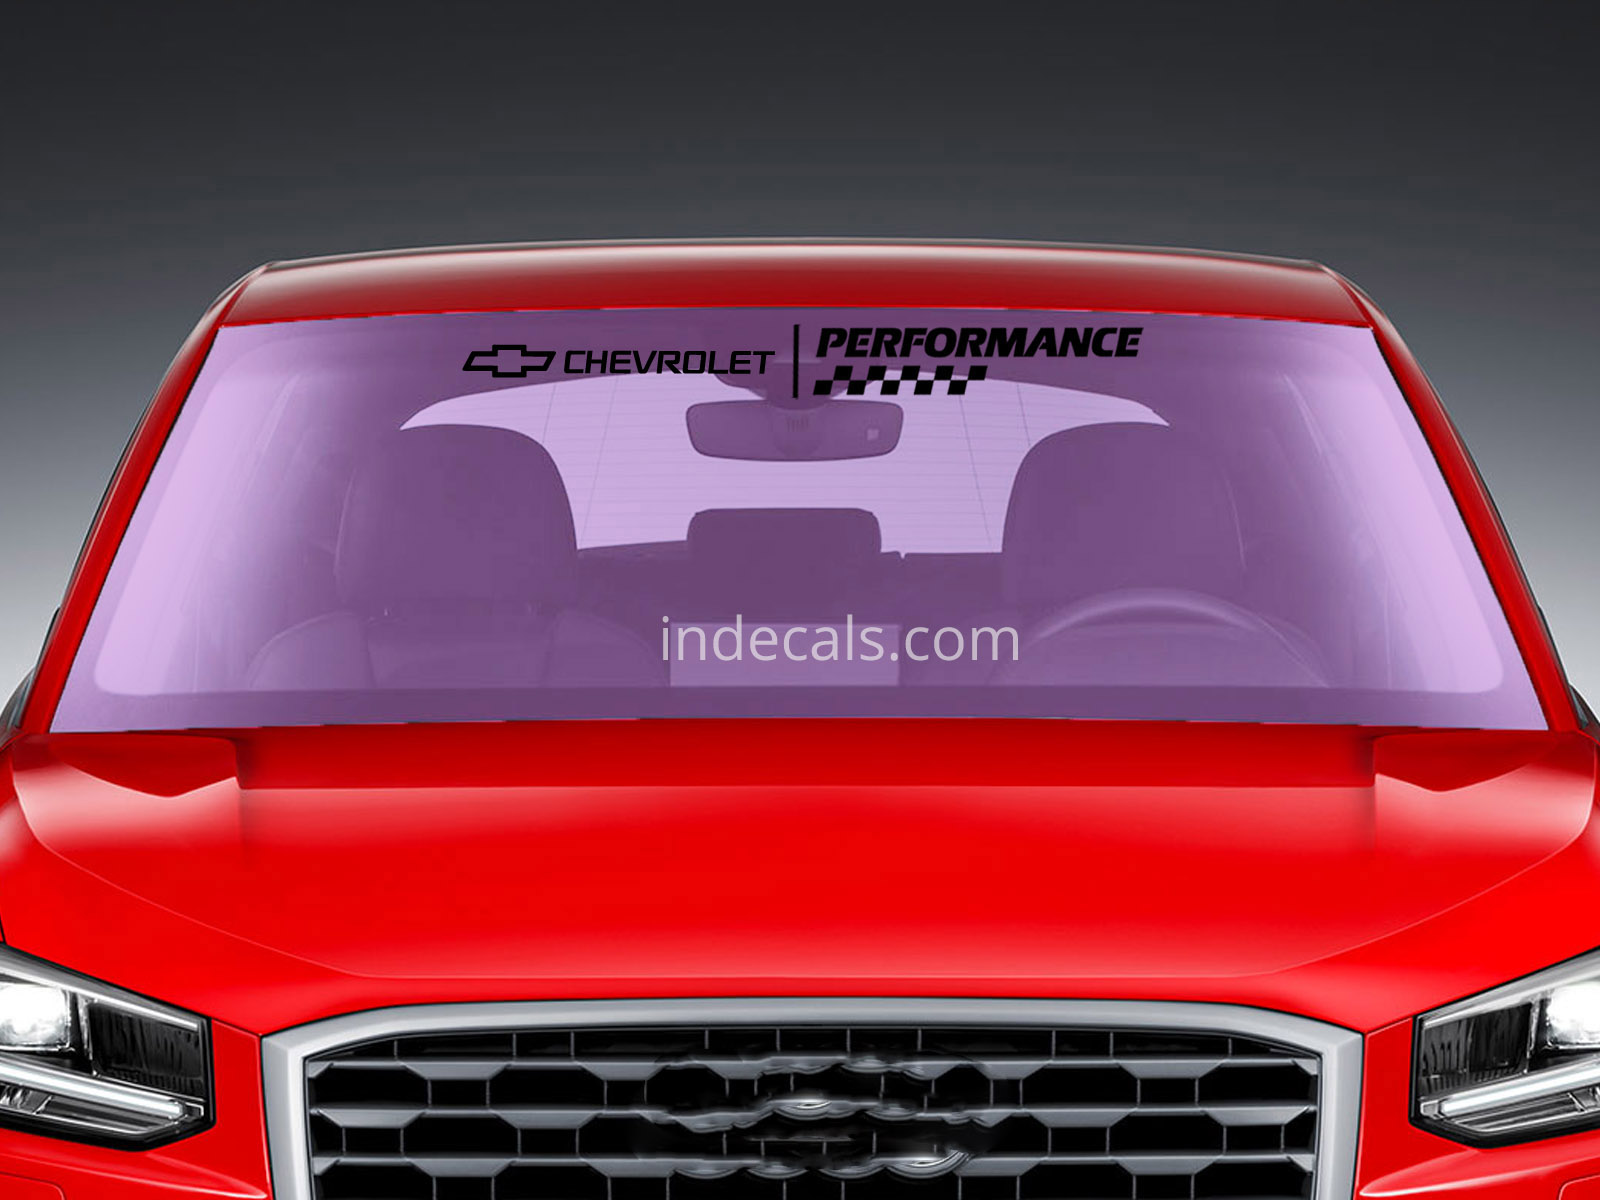 1 x Chevrolet Performance Sticker for Windshield or Back Window - Black